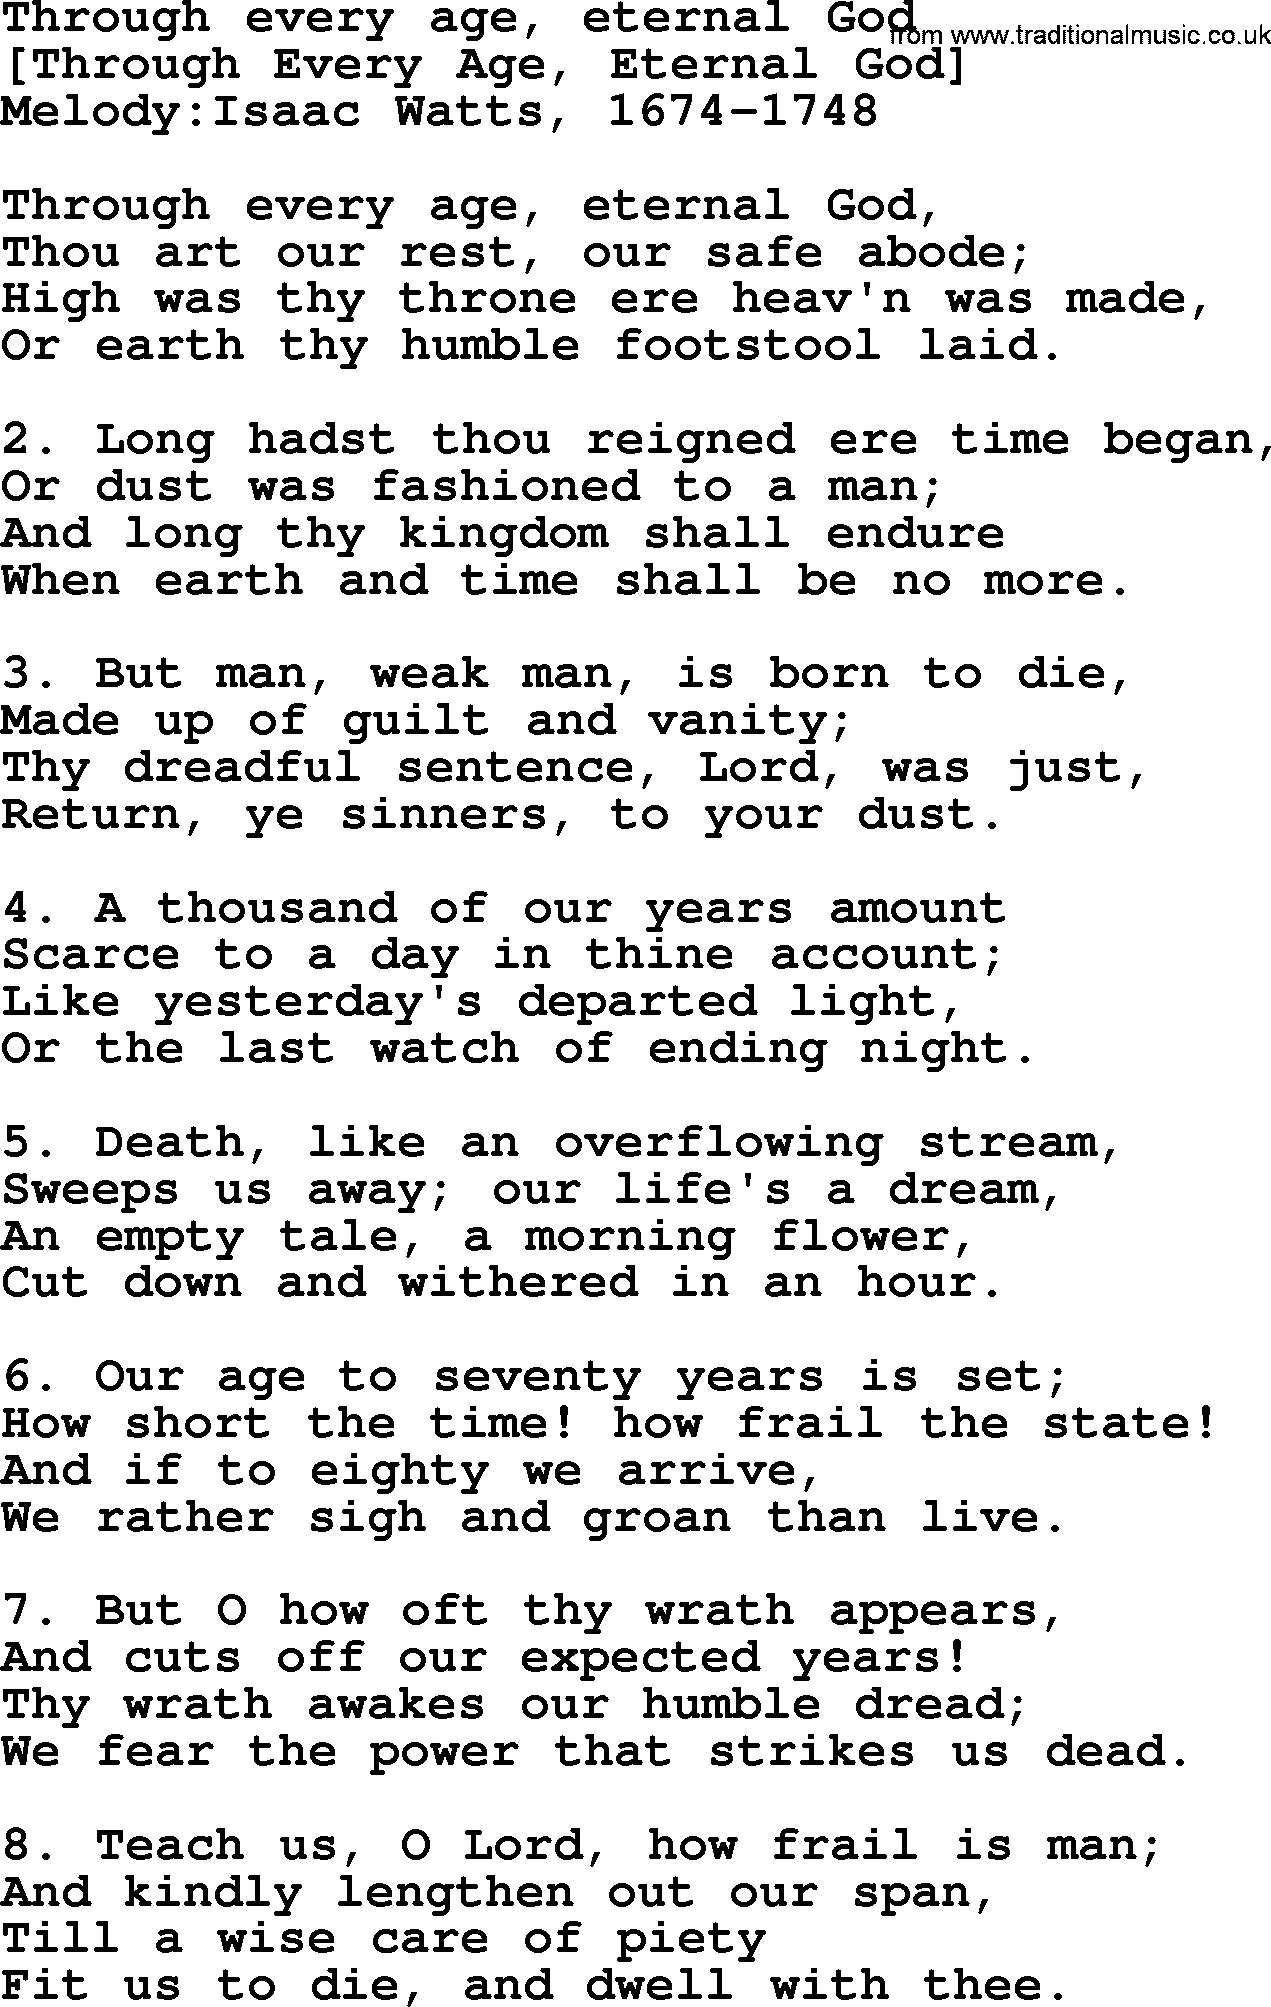 Old English Song: Through Every Age, Eternal God lyrics